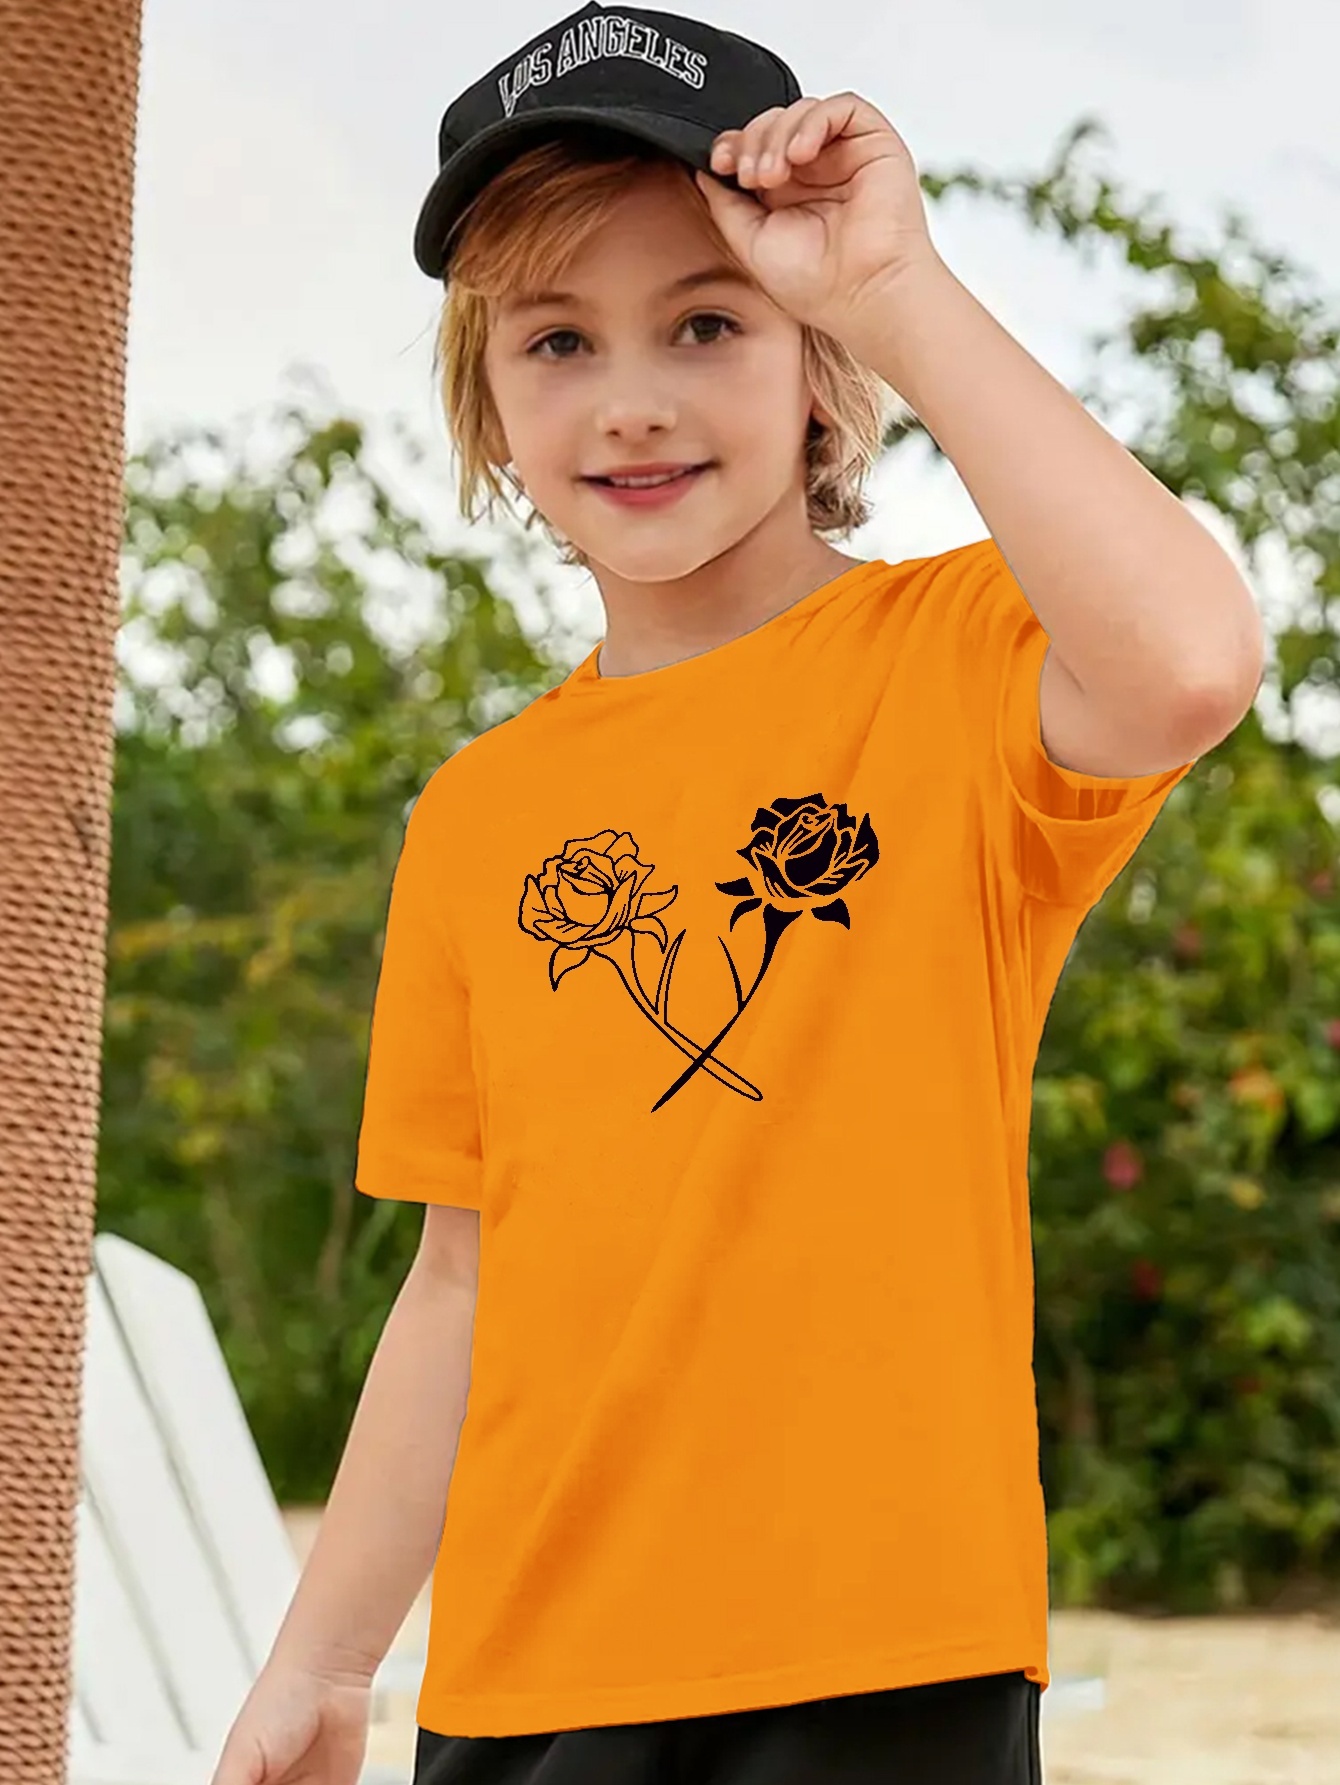 Roblox Face 21 Girl Character T-Shirt, Children Costume Shirts